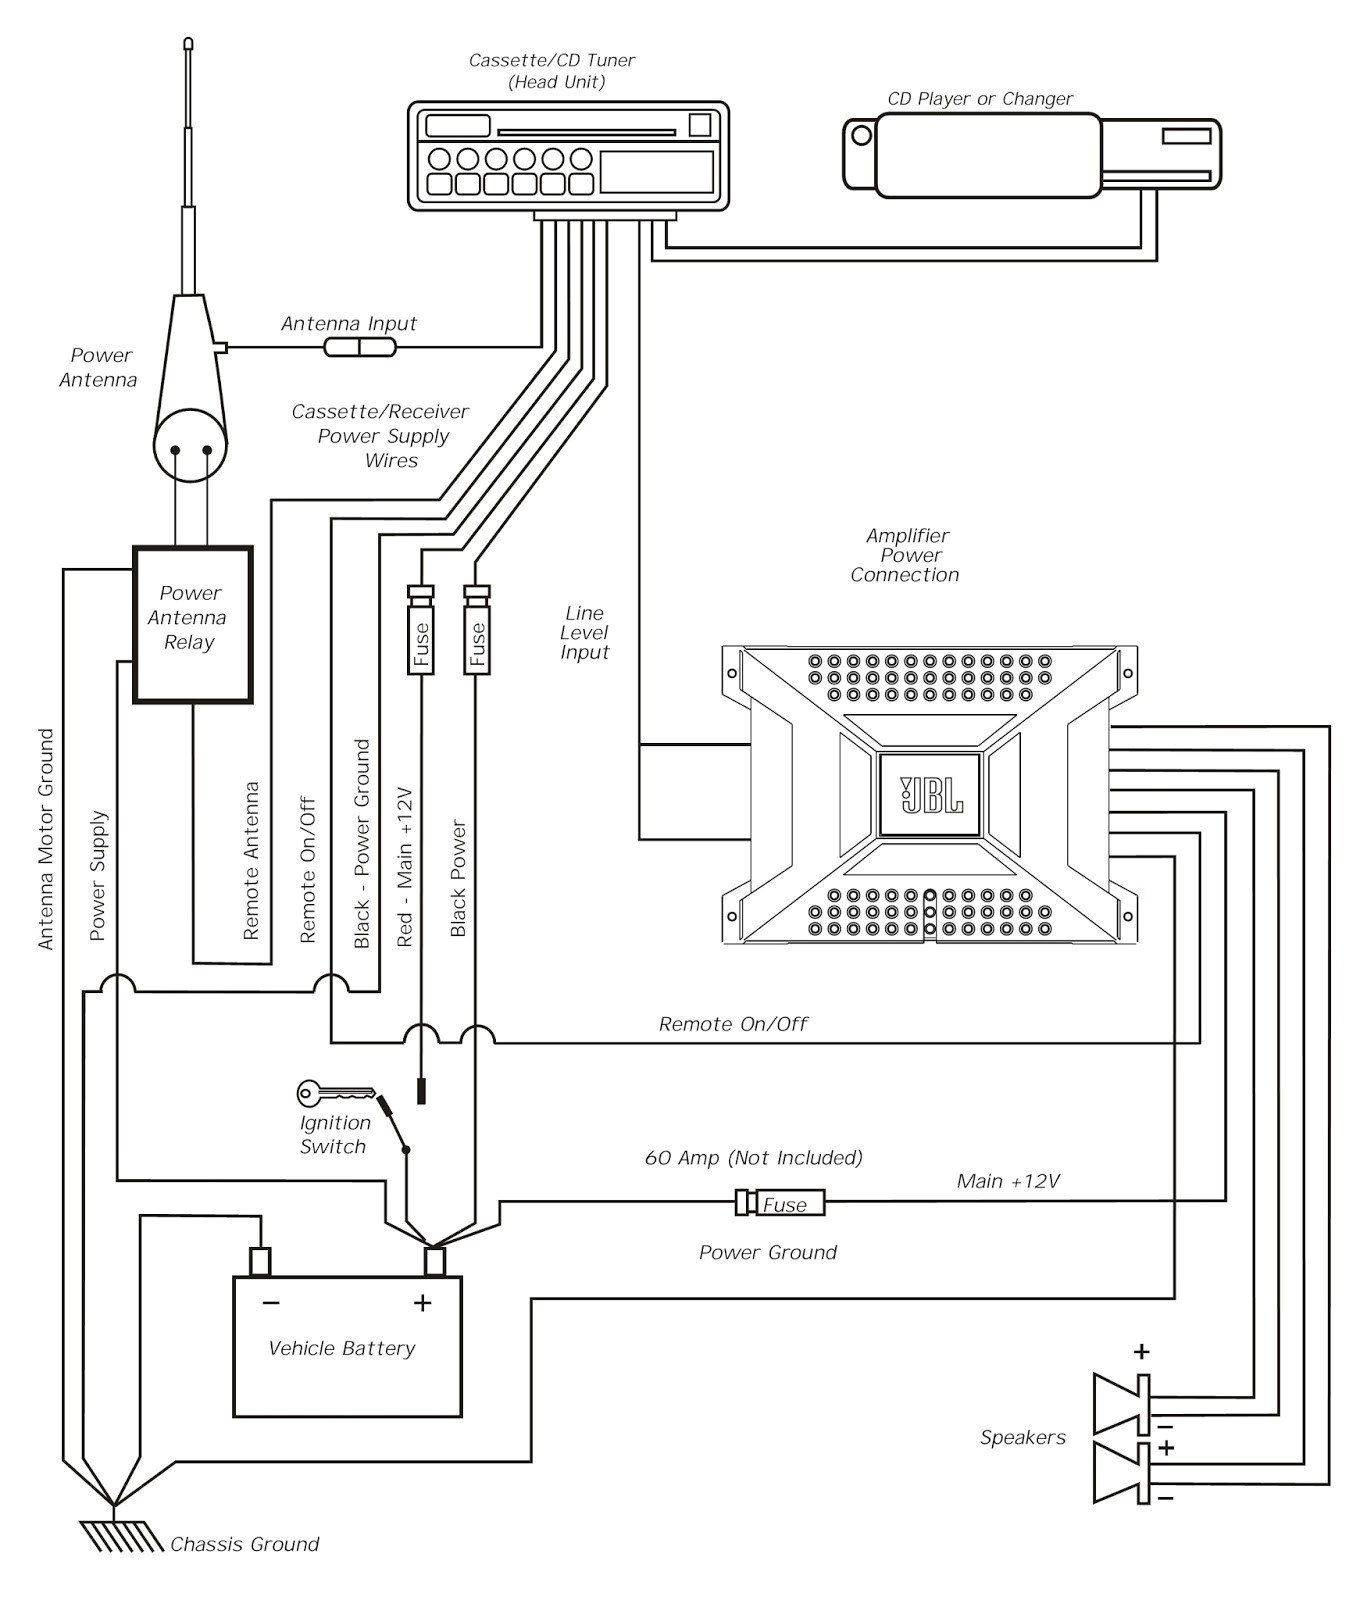 sony radio wiring diagram best of sony car radio wiring diagram sony cd player wiring